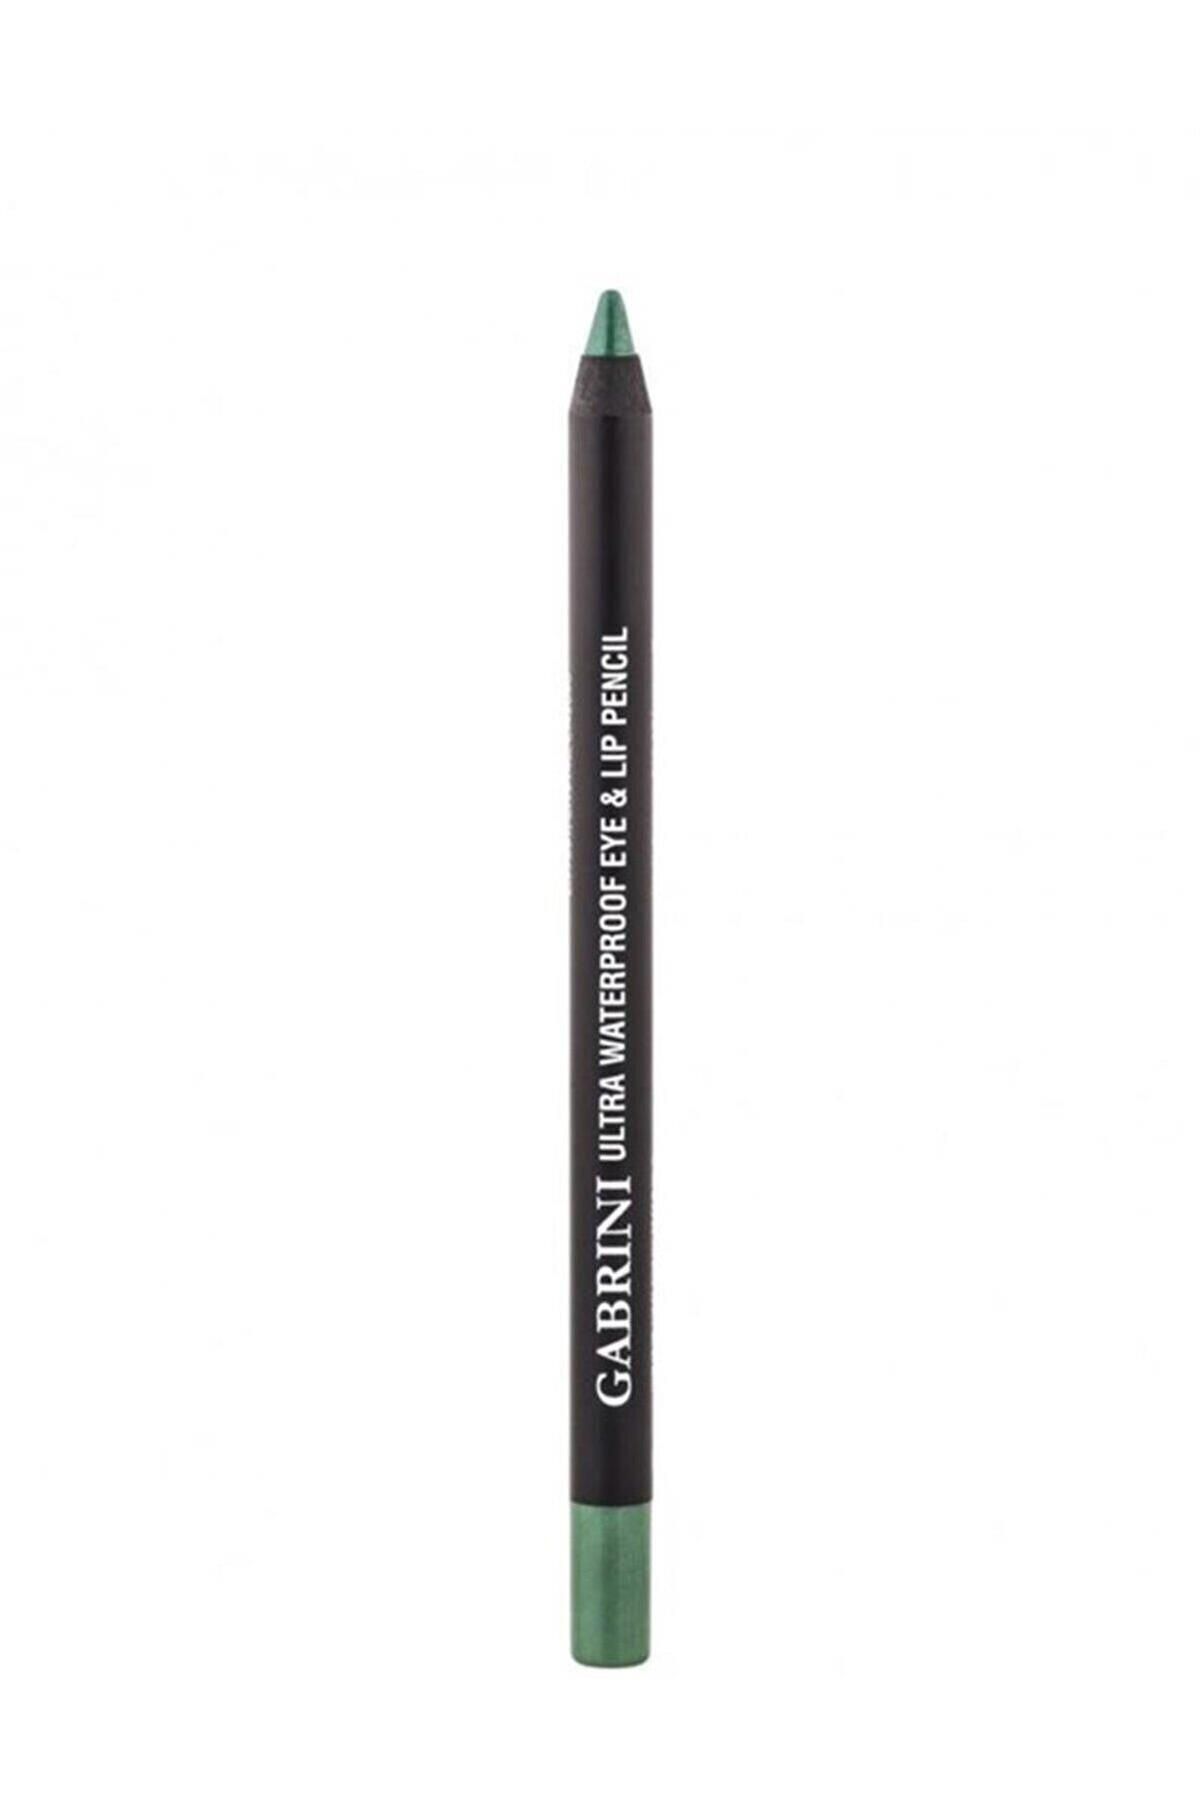 Gabrini Ultra Waterproof Eye & Lip Pencil 20